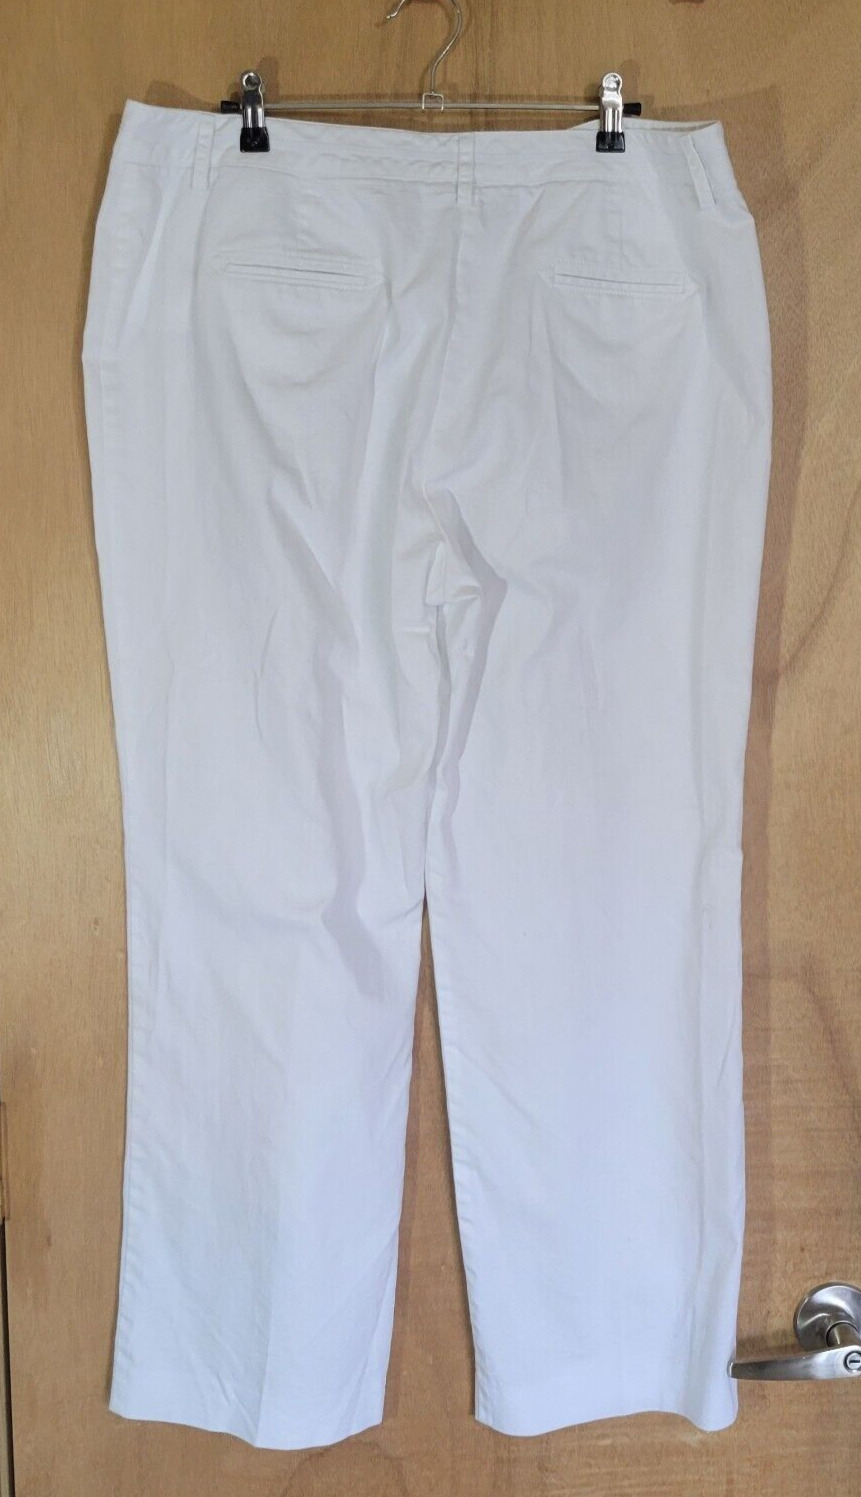 Dress Barn Petite Pants Size 16 P White - image 2